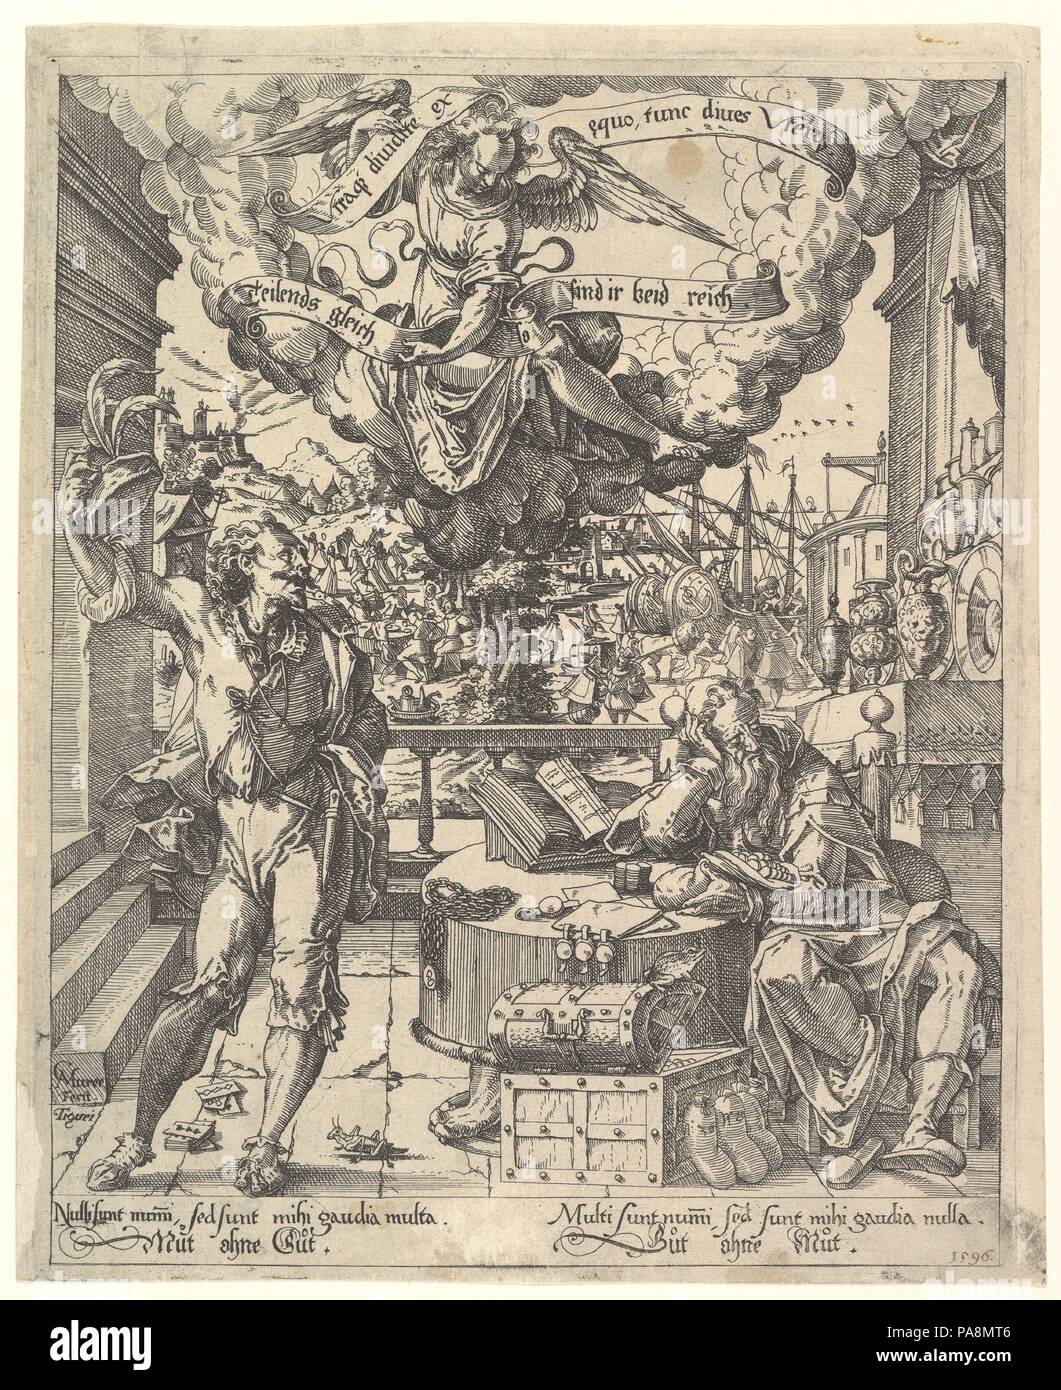 An Allegory of a Rich Man and a Poor Man (Der Lustige Arme und der Traurige Reiche). Artist: Christoph Murer (Swiss, Zurich 1558-1614 Winterthur). Dimensions: sheet: 10 3/16 x 8 3/8 in. (25.8 x 21.2 cm)  plate: 9 15/16 x 8 in. (25.2 x 20.3 cm)  image: 9 5/8 x 7 11/16 in. (24.5 x 19.6 cm). Date: 1596. Museum: Metropolitan Museum of Art, New York, USA. Stock Photo